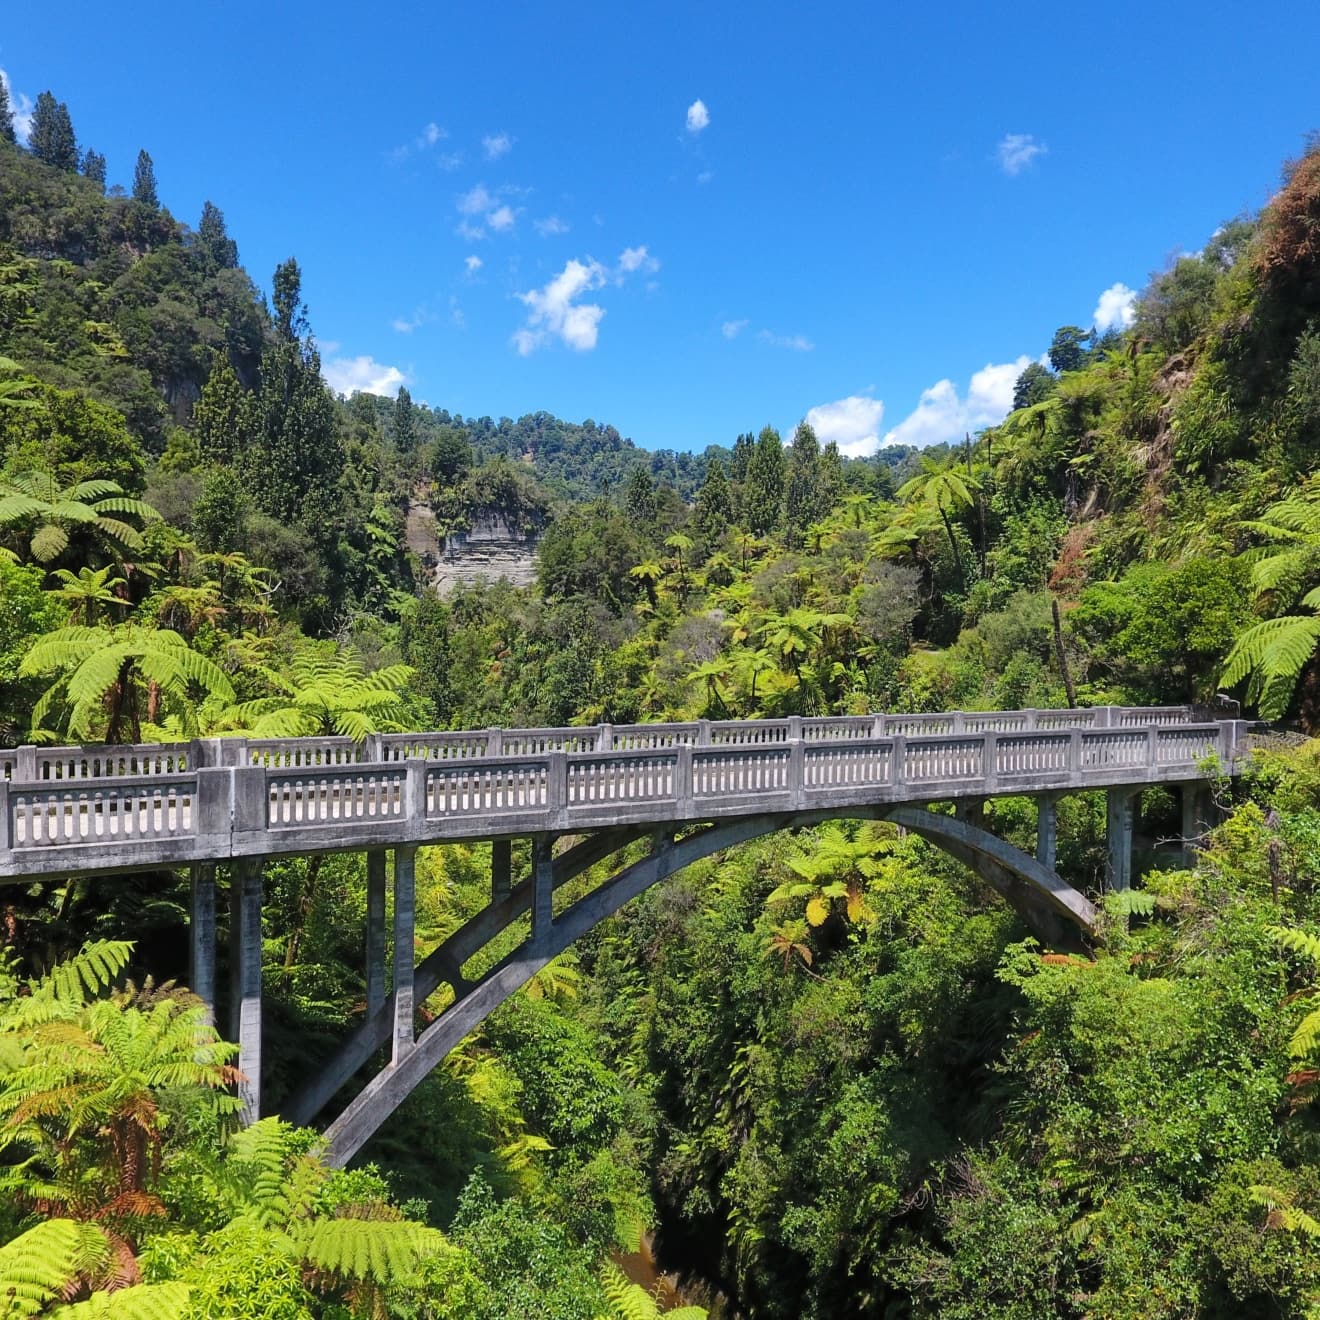 Bridge to Nowhere in Neuseeland